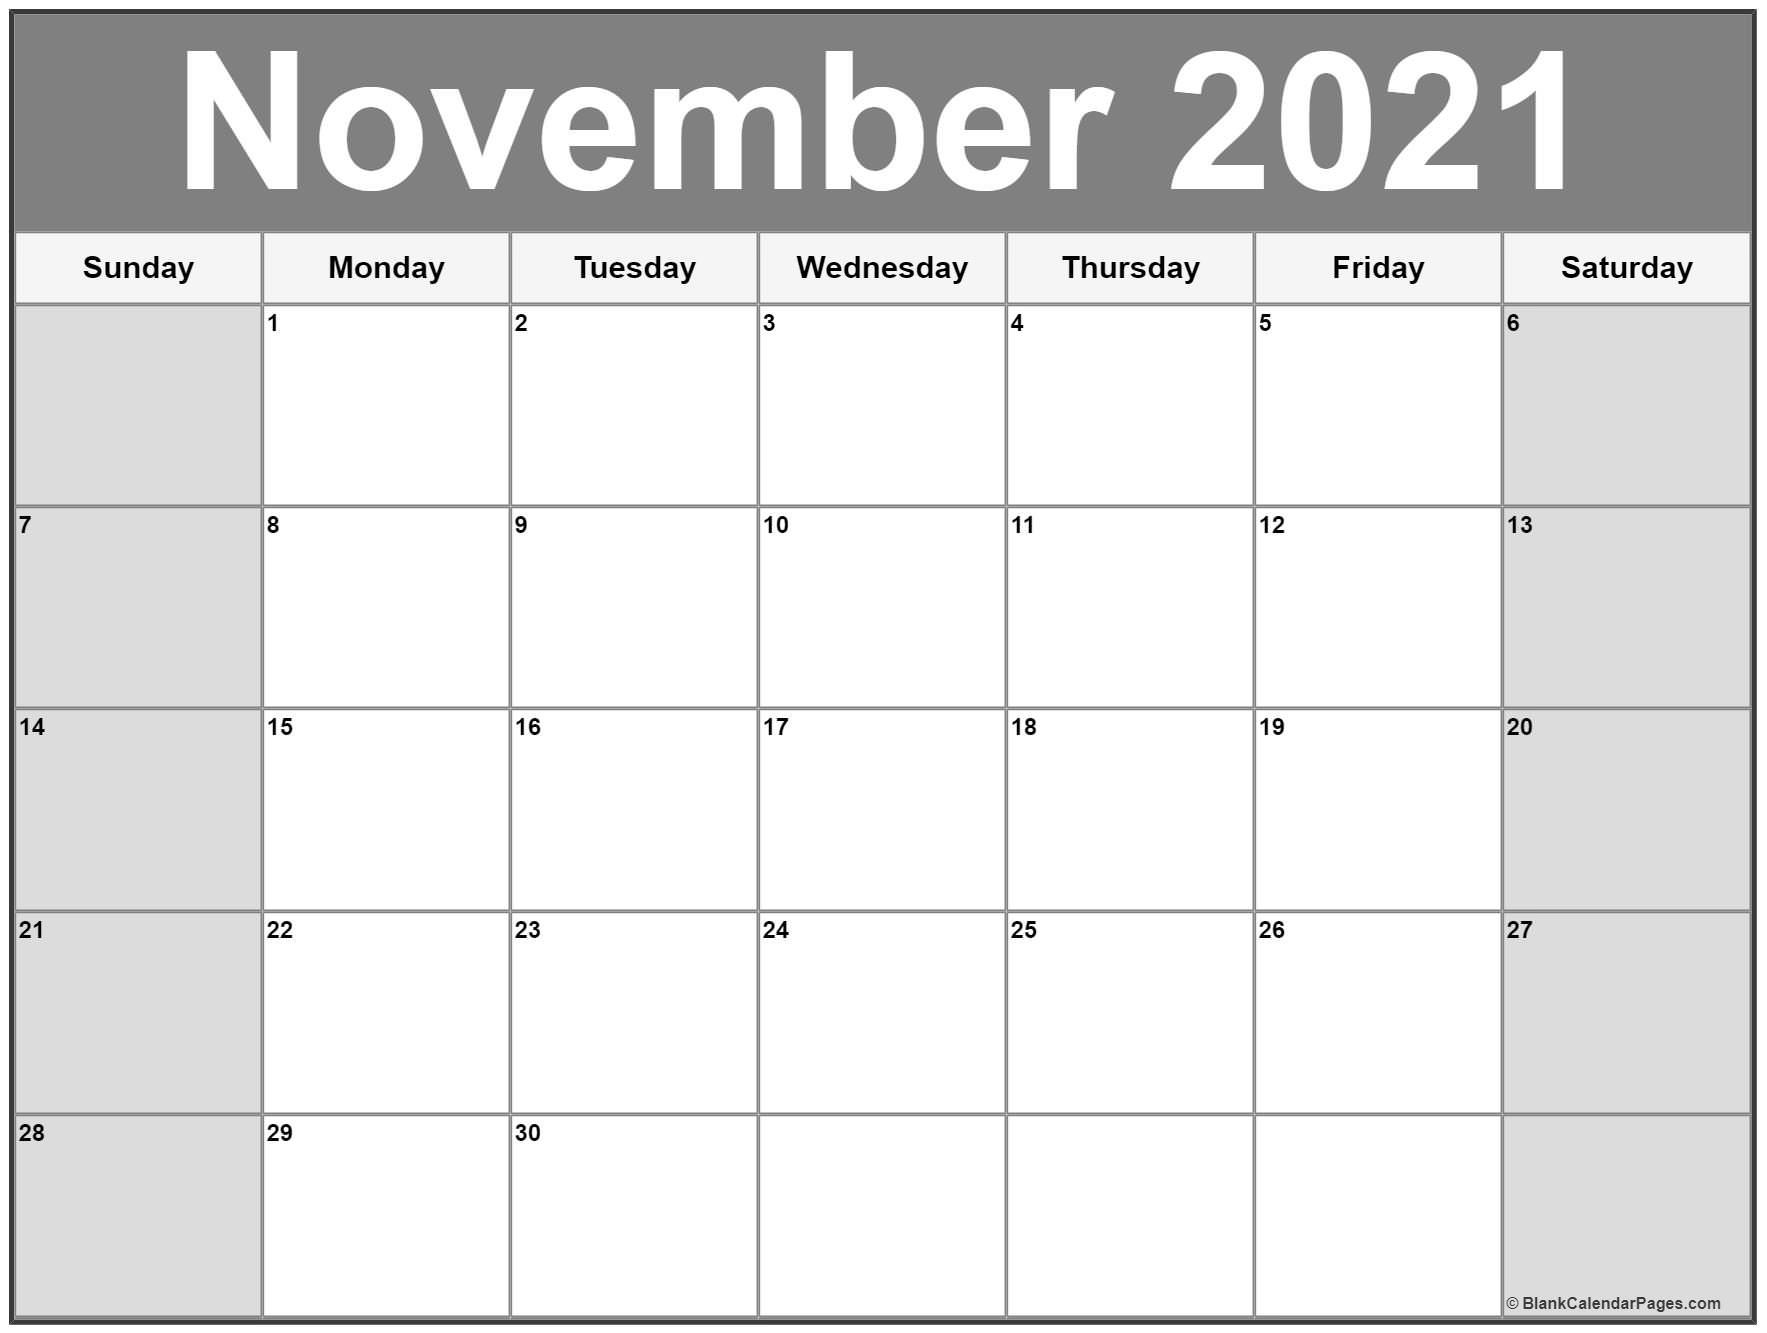 November 2021 Calendar | 56+ Templates Of 2021 Printable Calendars 2021 Calendar Of November